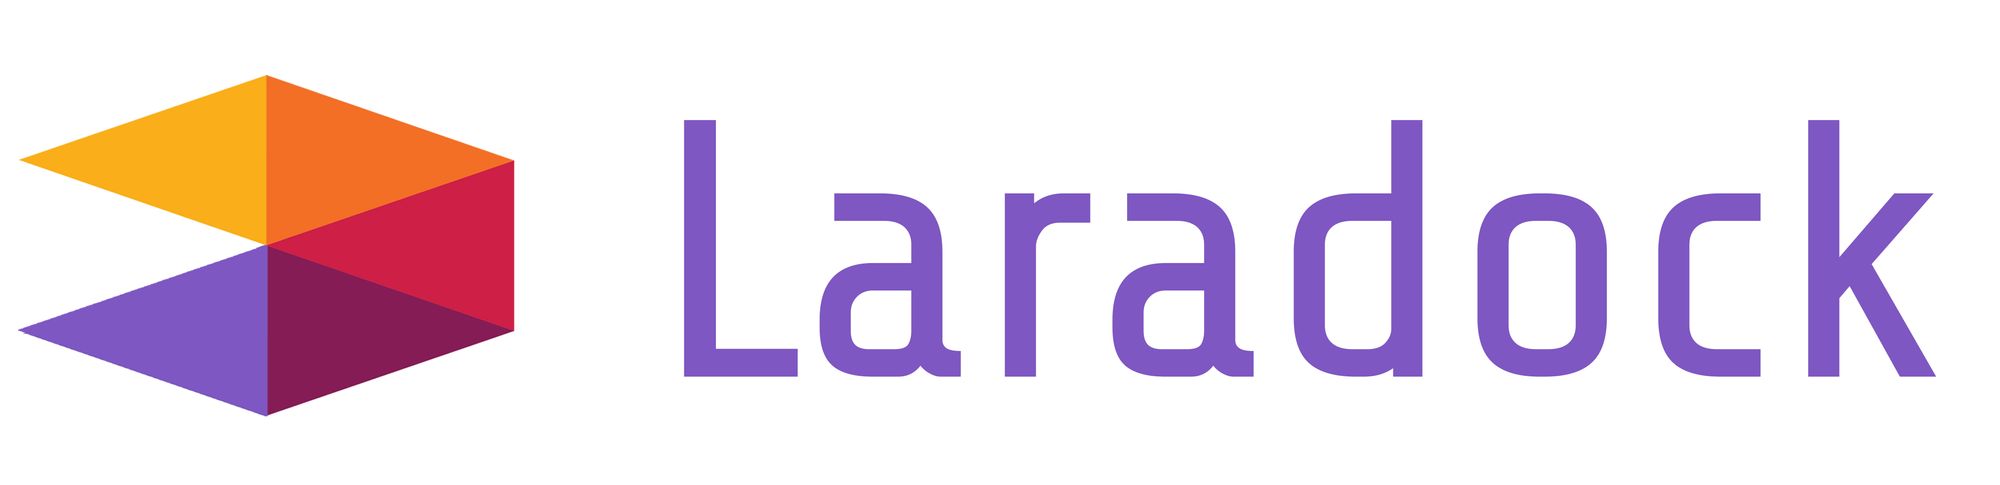 Tìm hiểu cách triển khai laravel + docker qua laradock